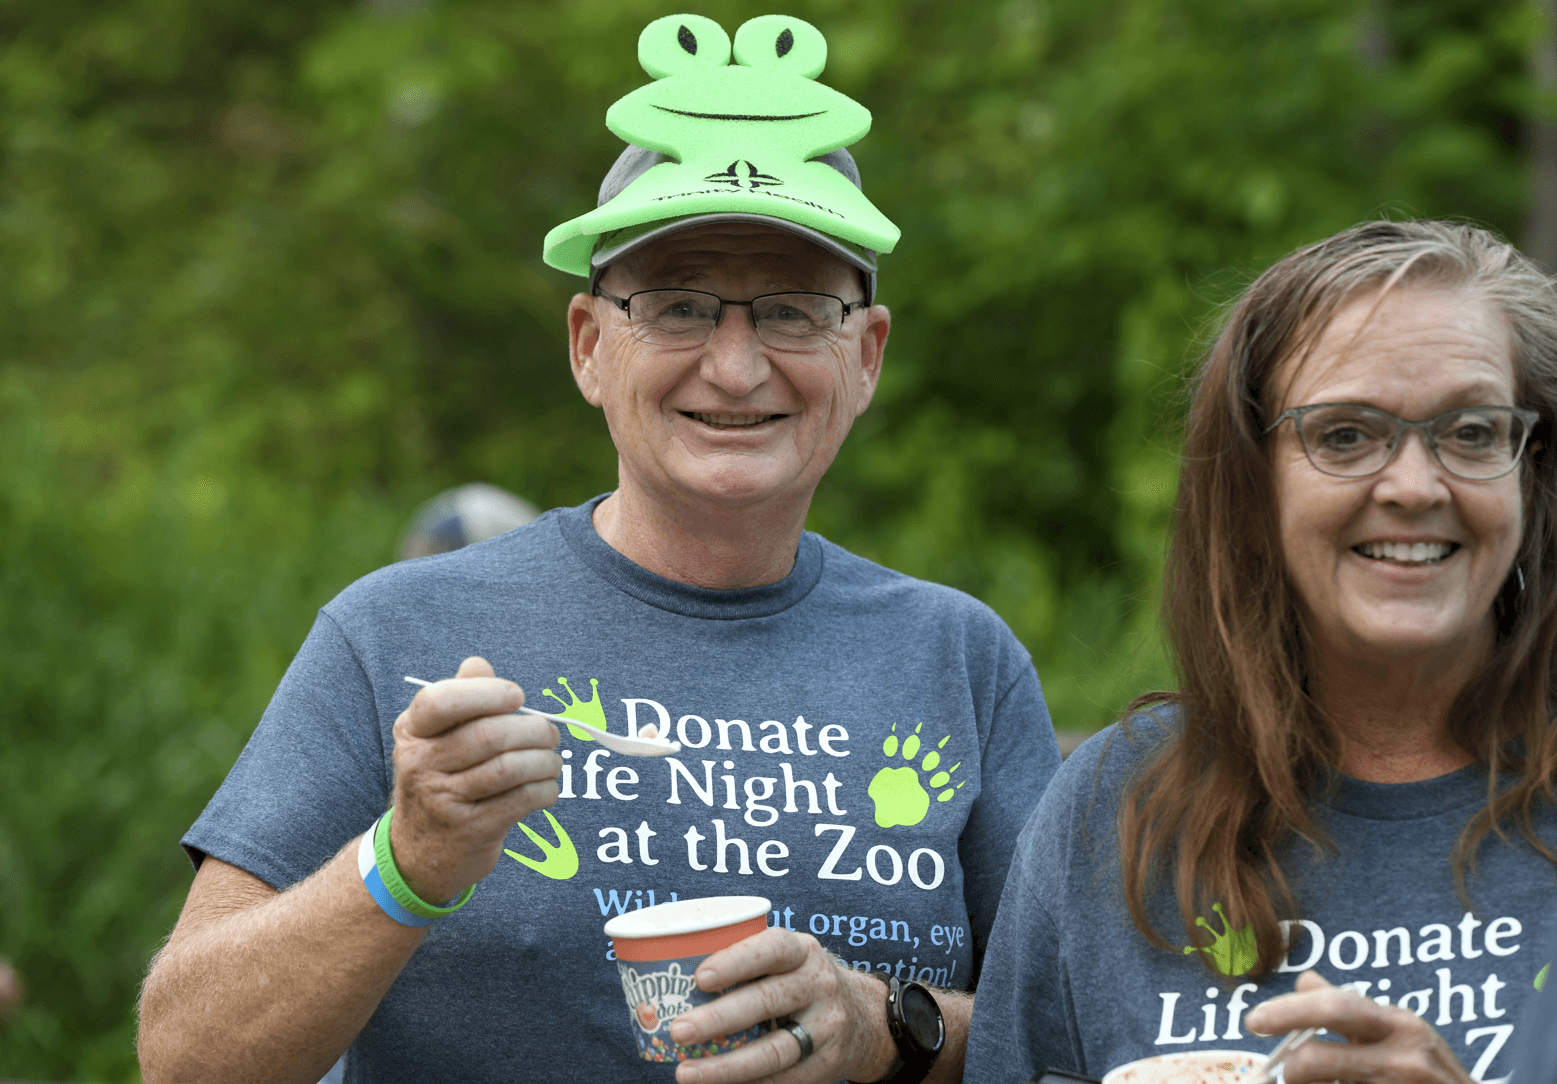 Guests enjoyed free Dippin' Dots ice cream at Donate Life Night at the Zoo